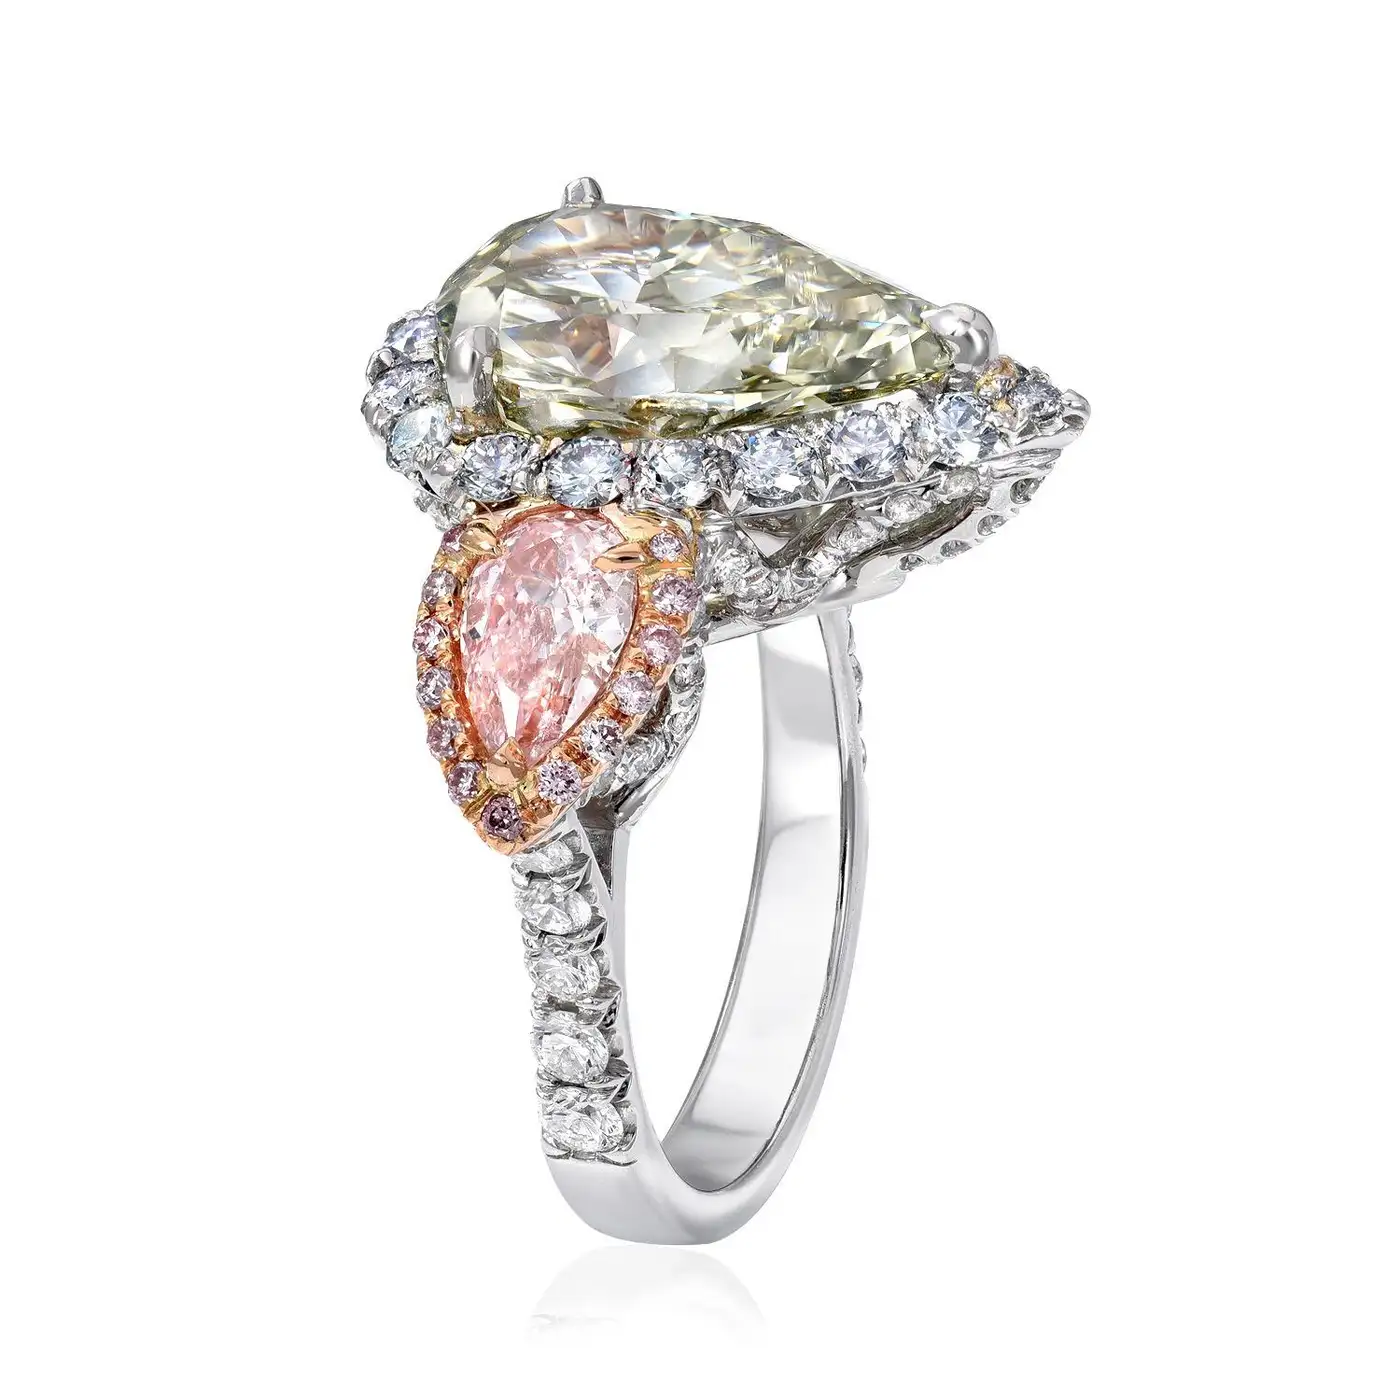 Green-Diamond-Ring-5.16-Carat-Pear-Shape-GIA-Certified-11.webp